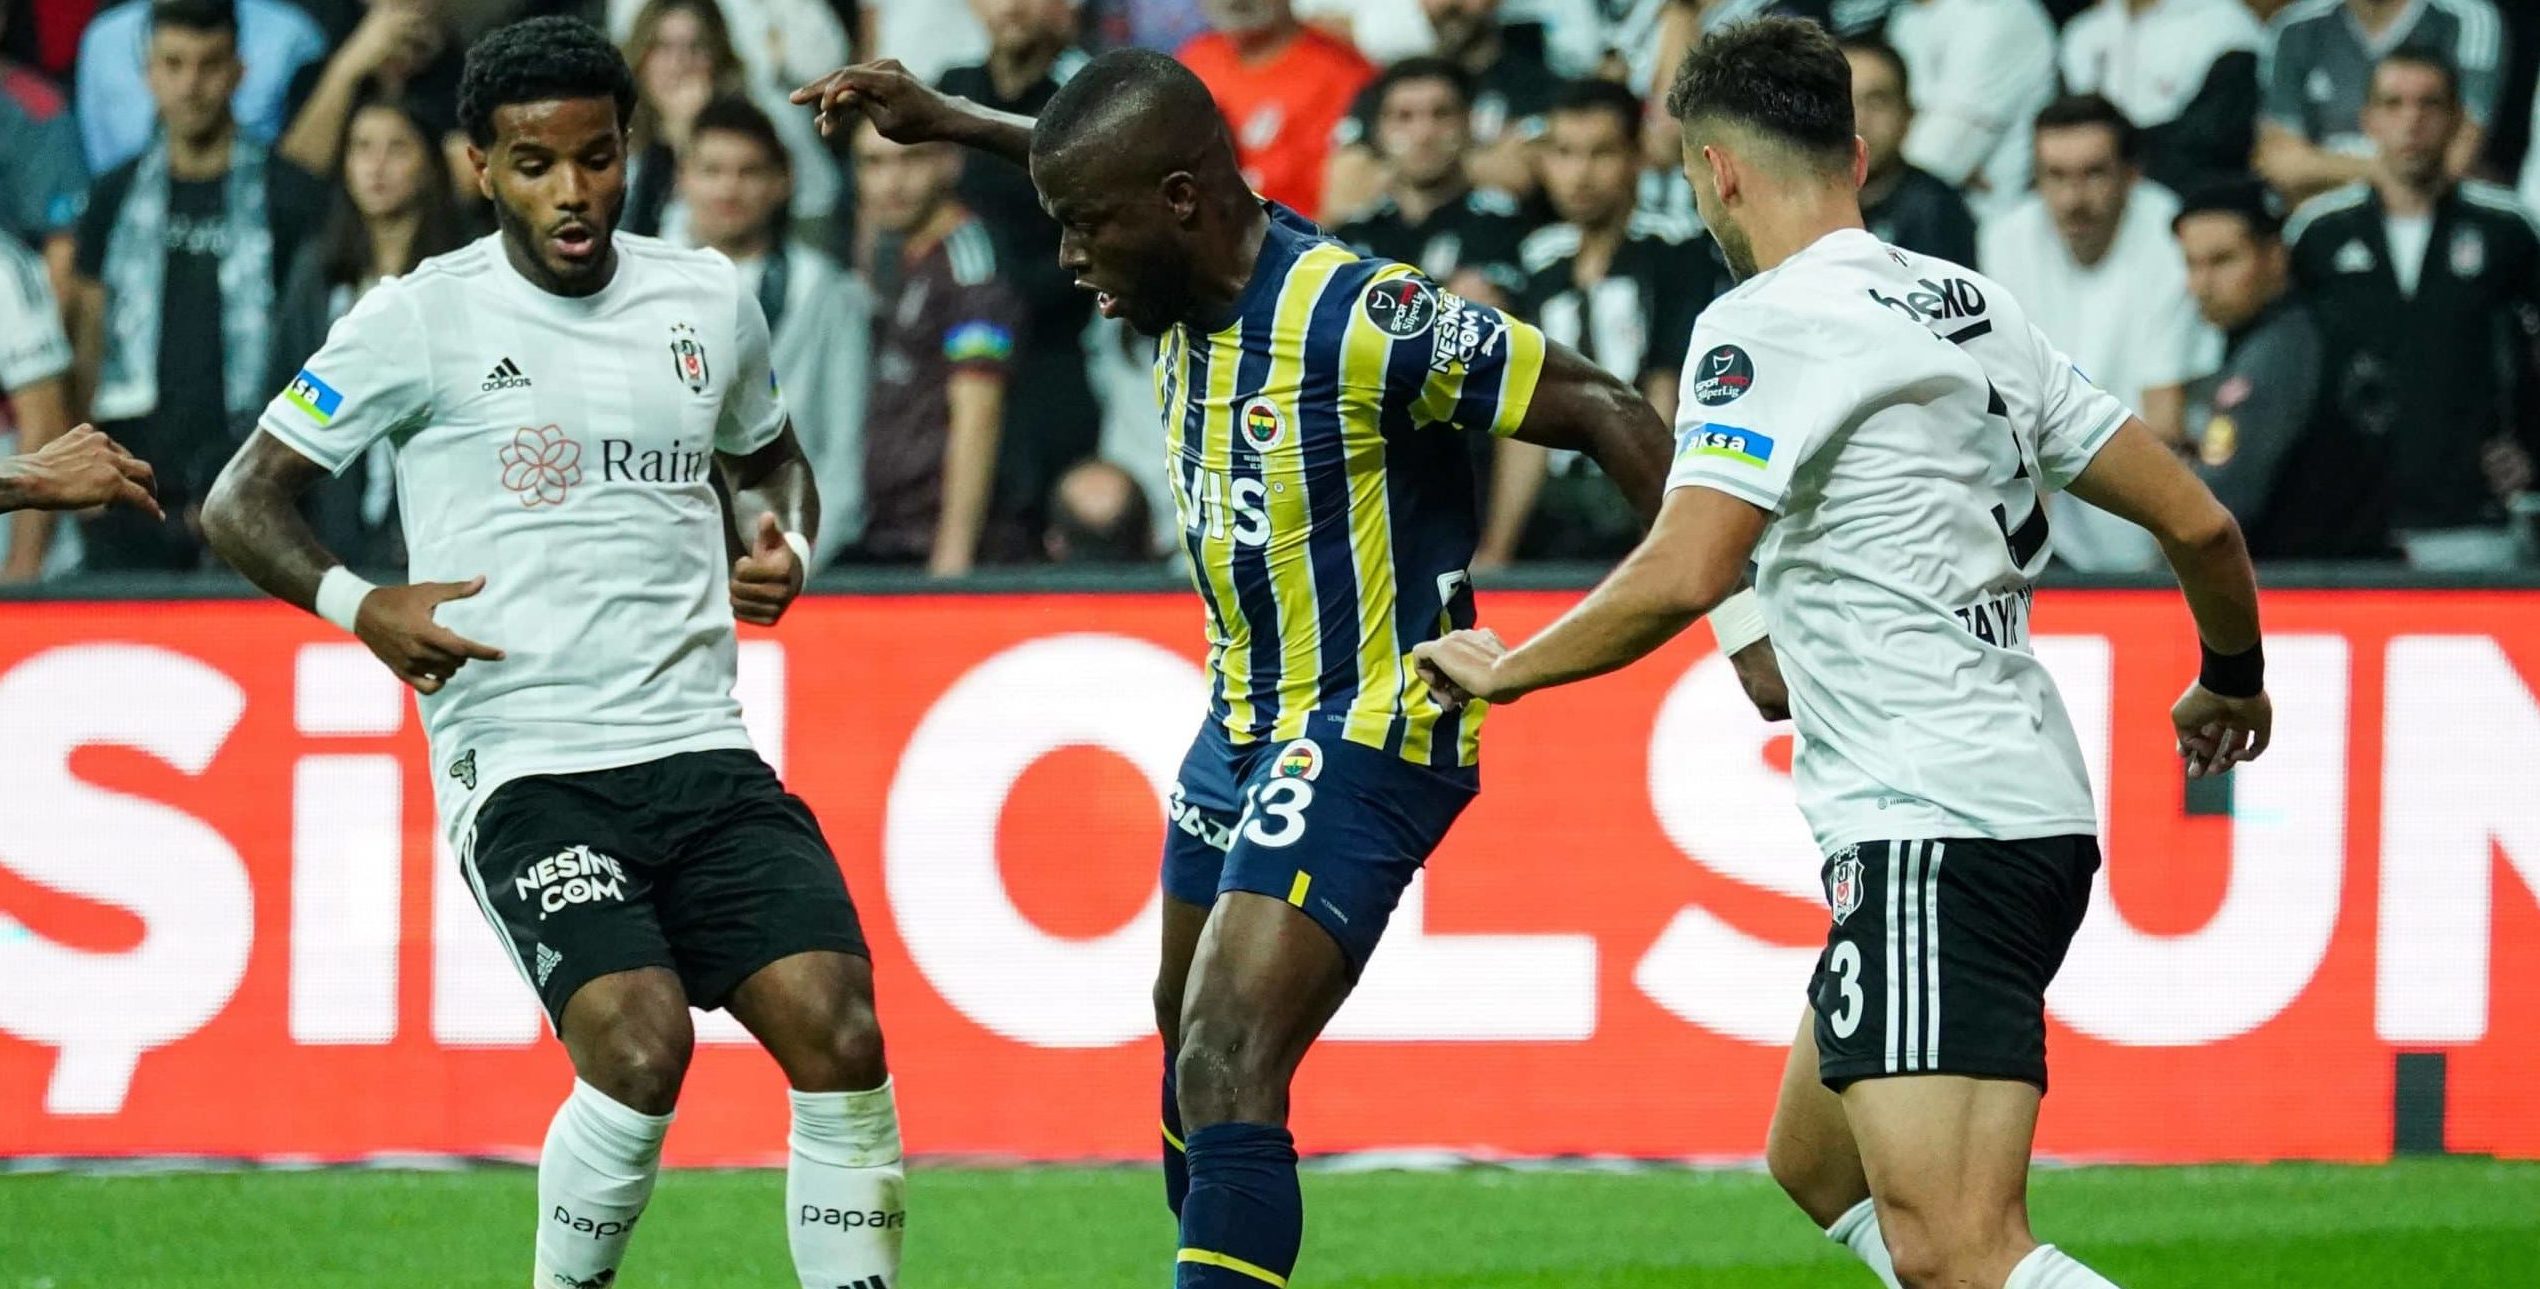 Ankaragücü vs Fenerbahçe: The Battle of Turkish Football Giants